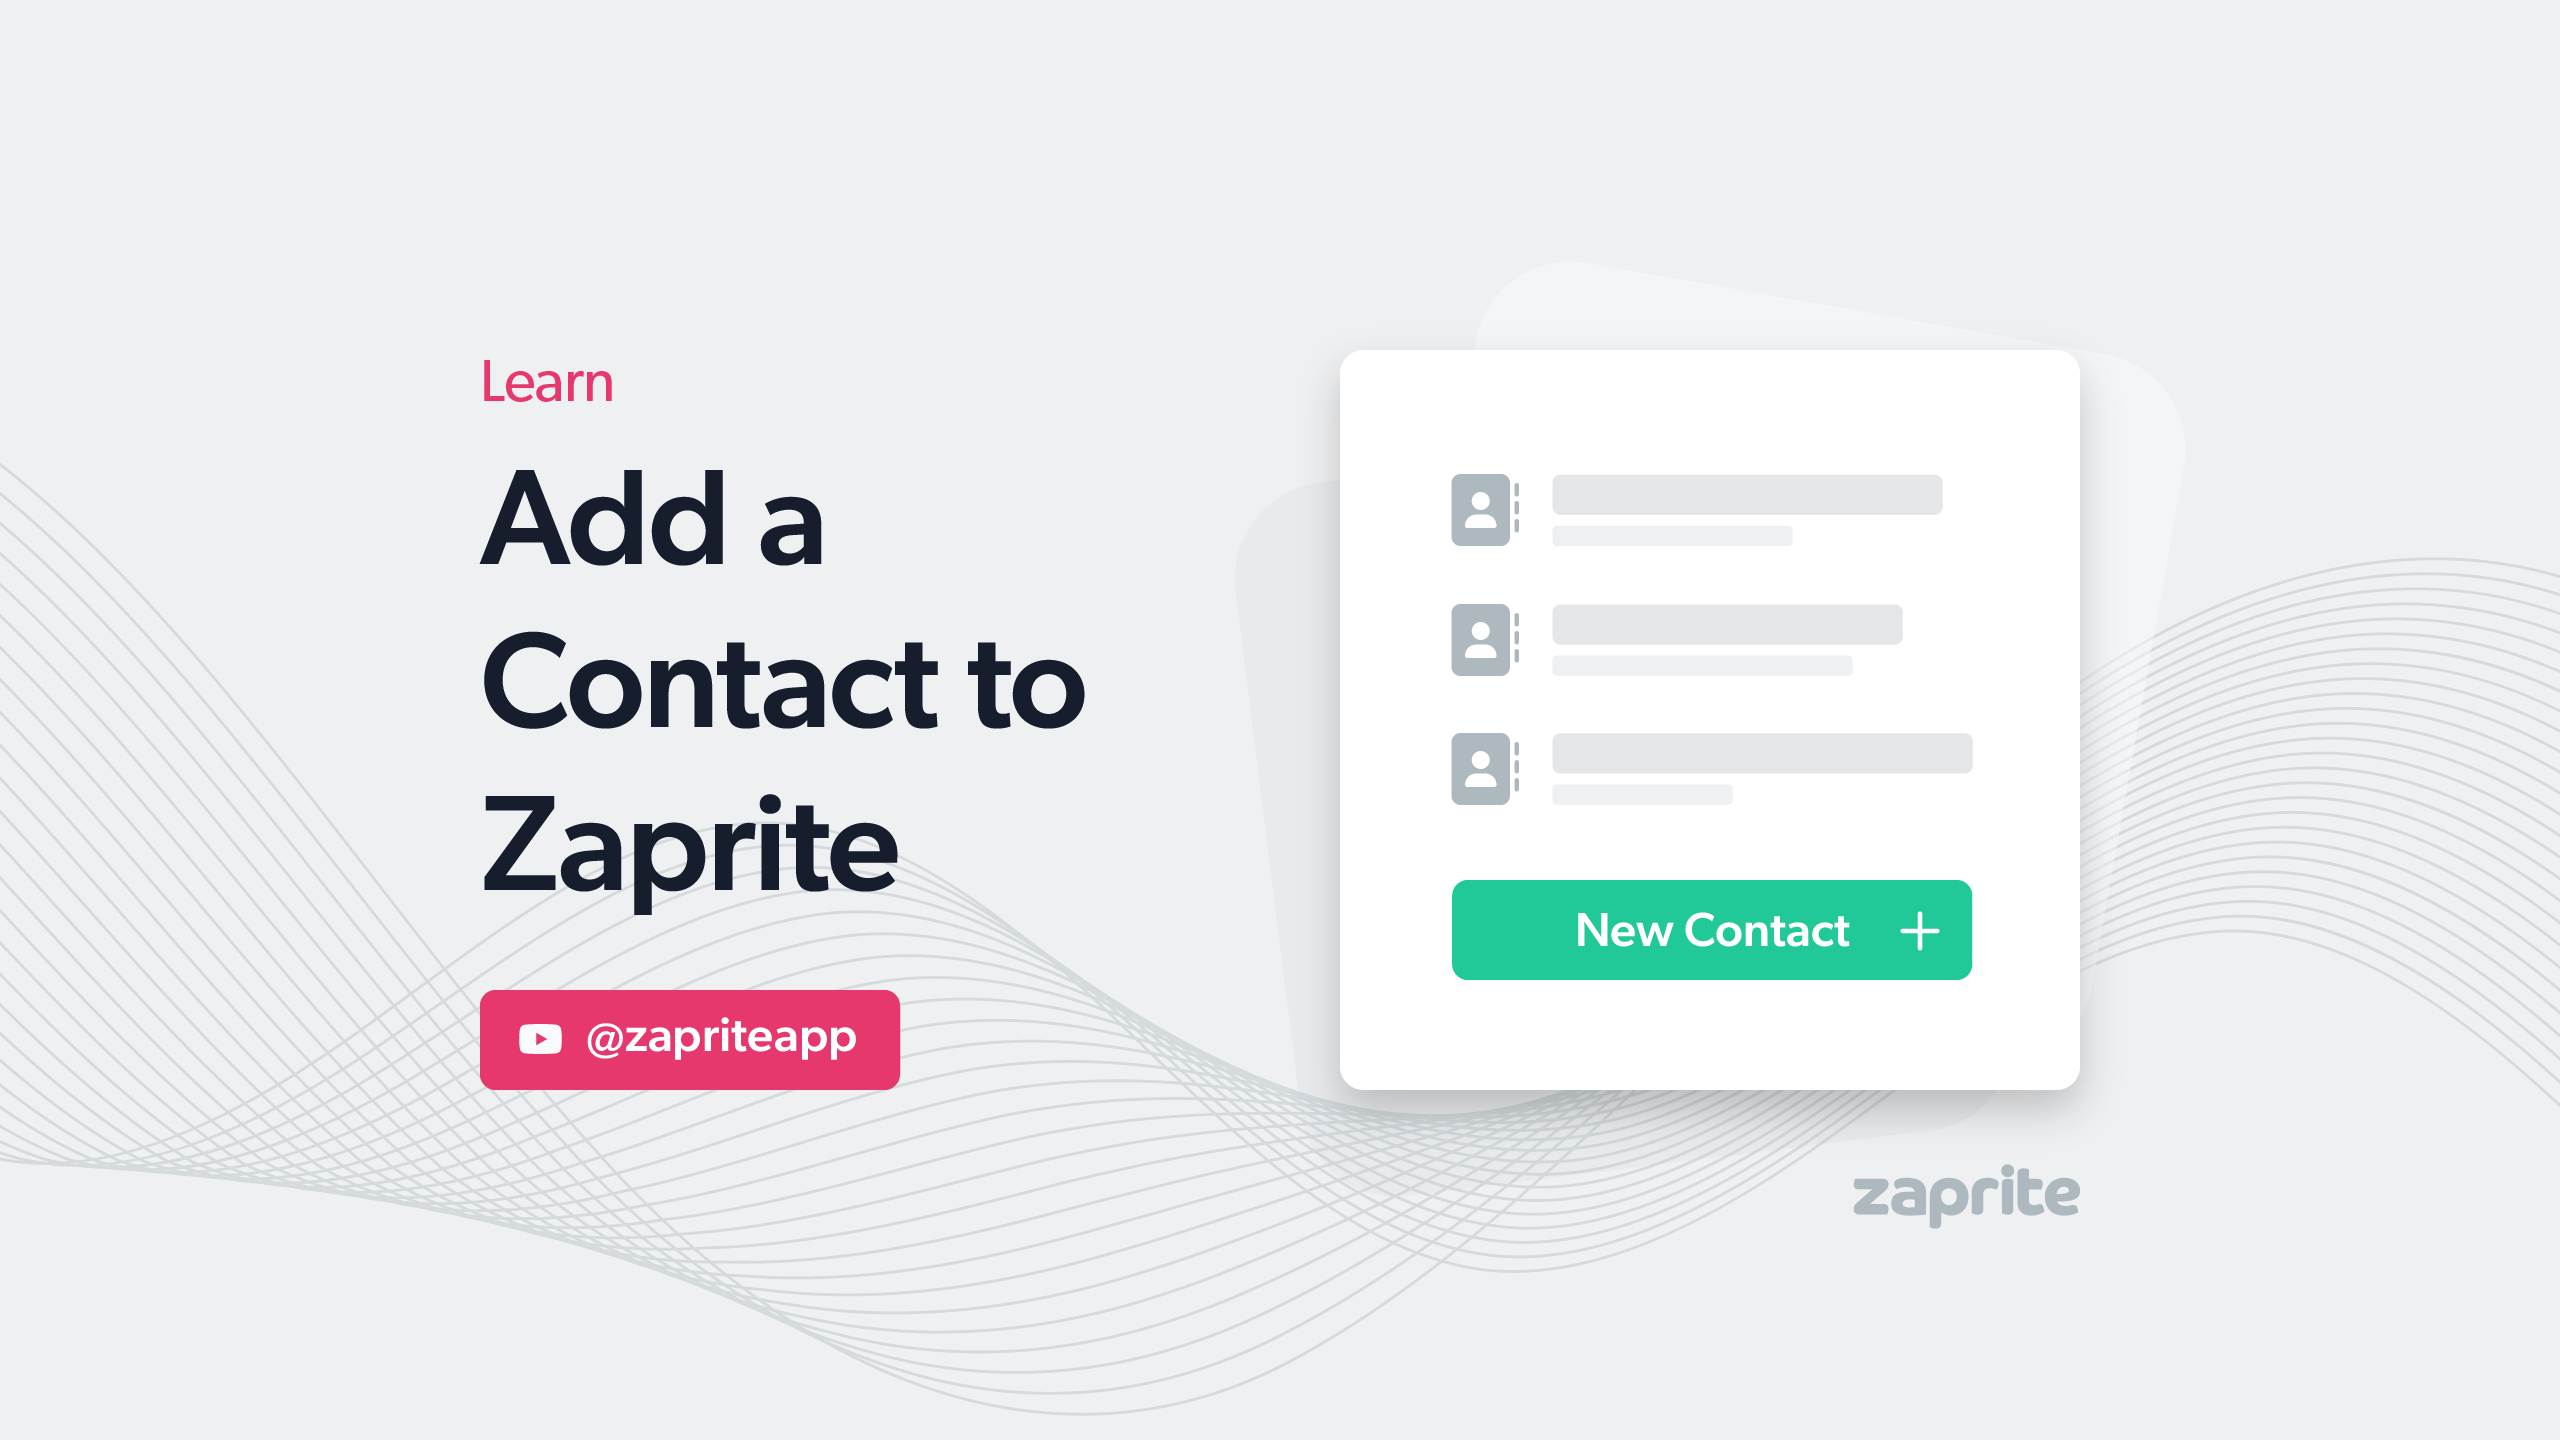 Add a Contact to Zaprite